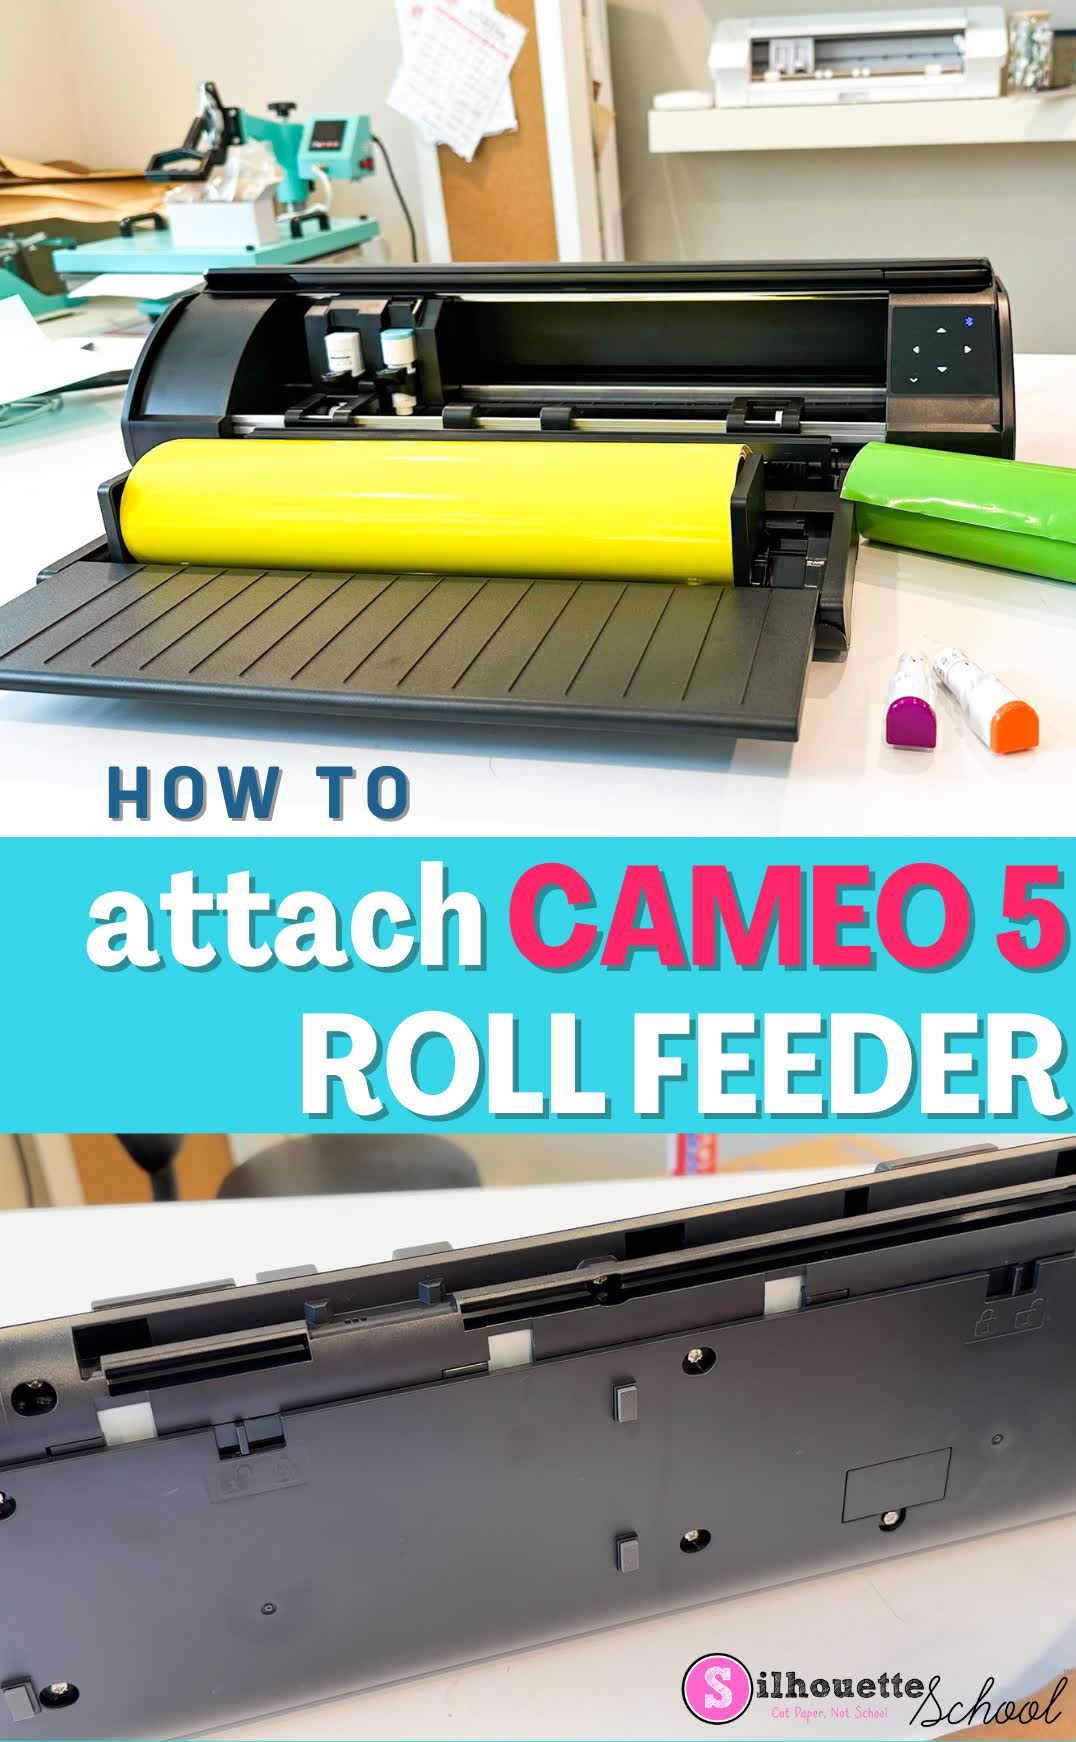 How to Setup CAMEO 5 Roll Feeder - Silhouette School